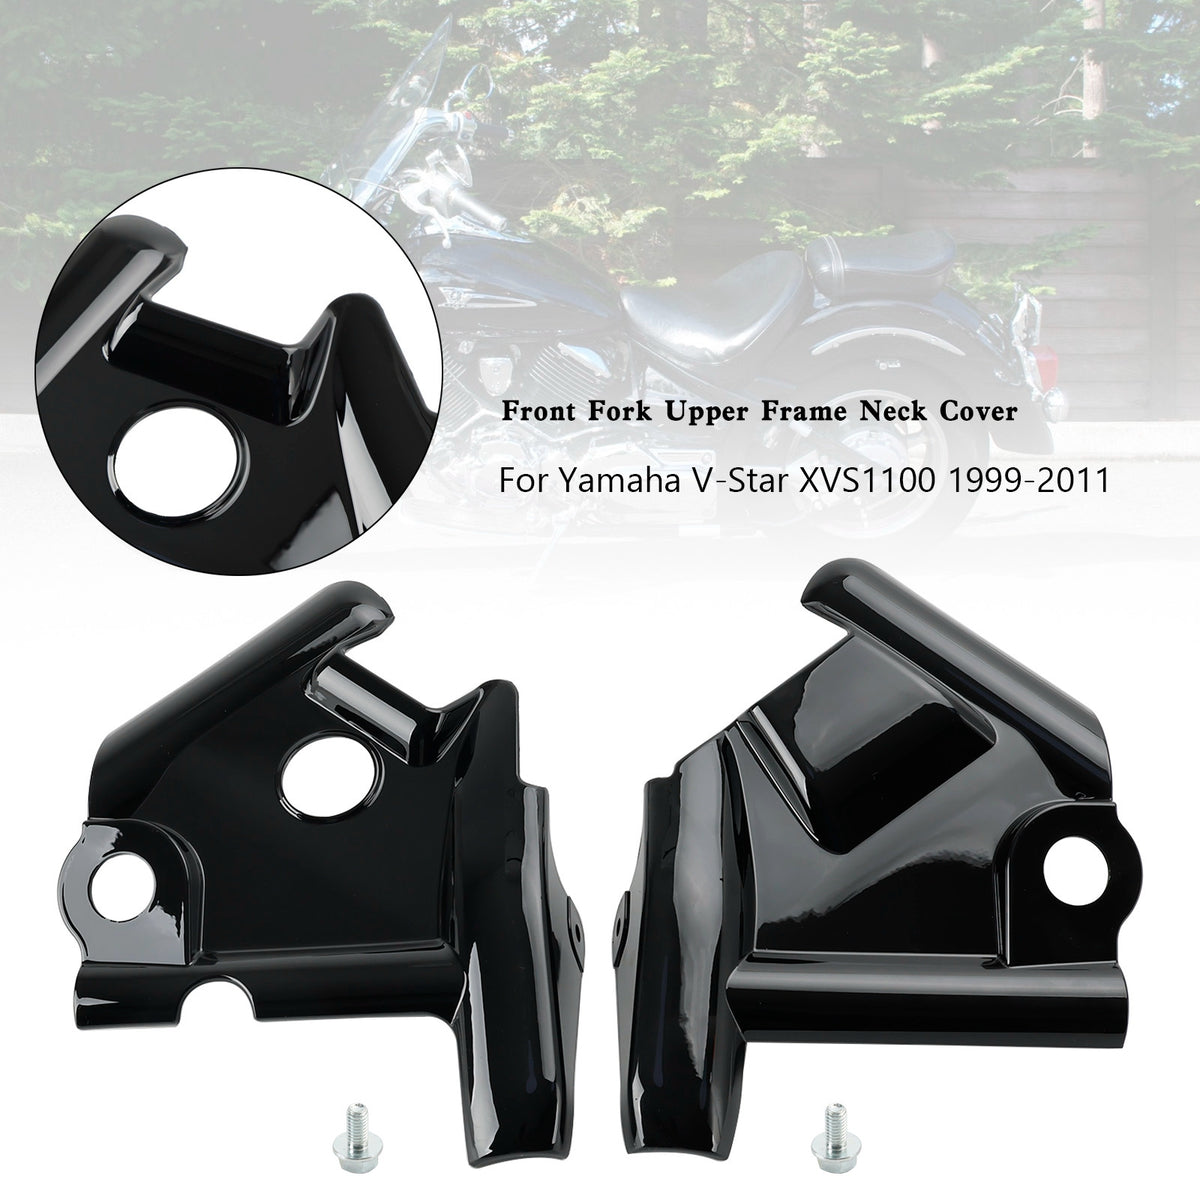 Front Fork Upper Frame Neck Cover For Yamaha V-Star XVS1100 1999-2011